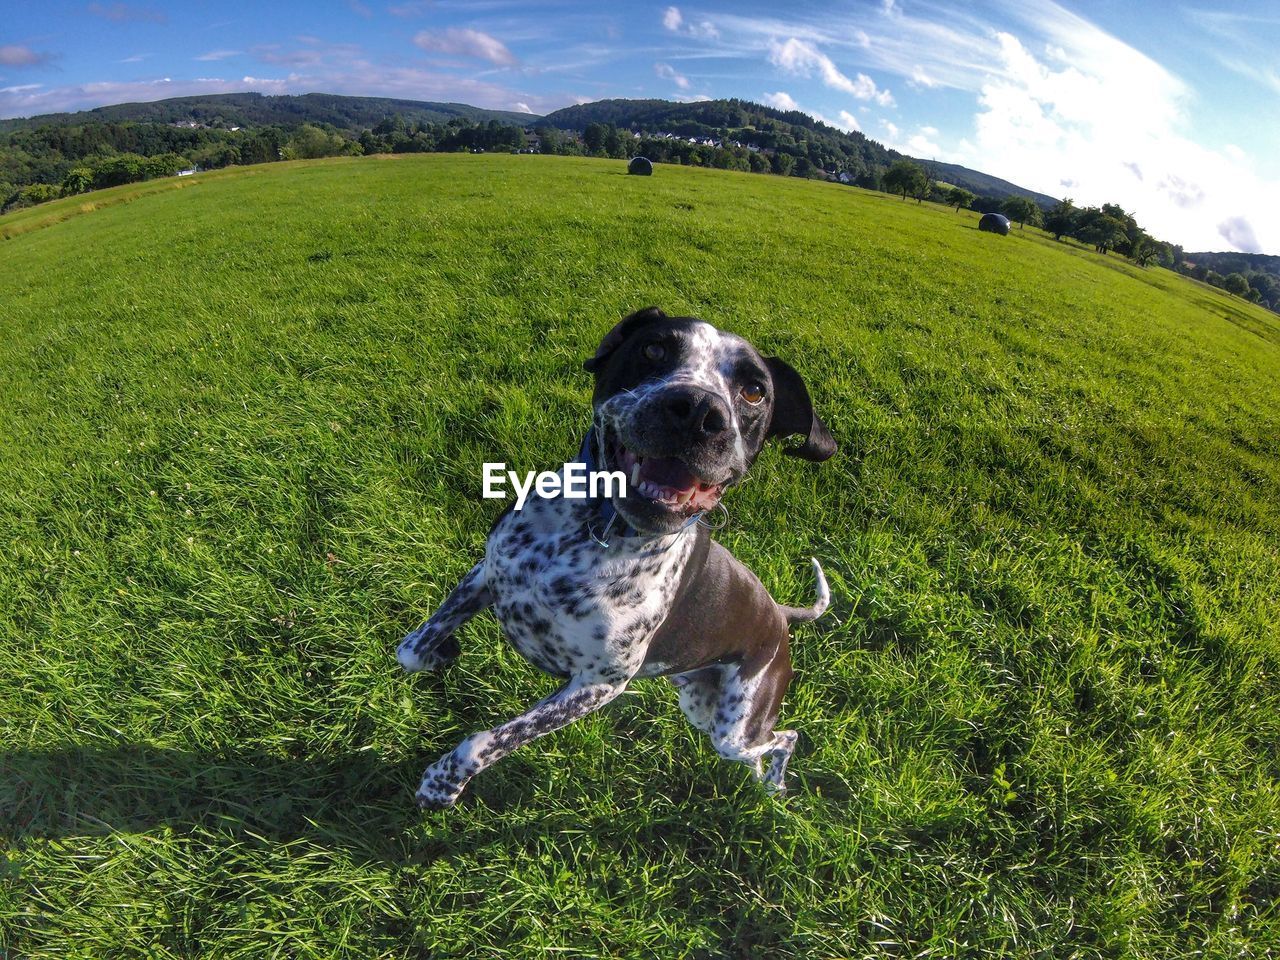 Dog on grassy field against sky